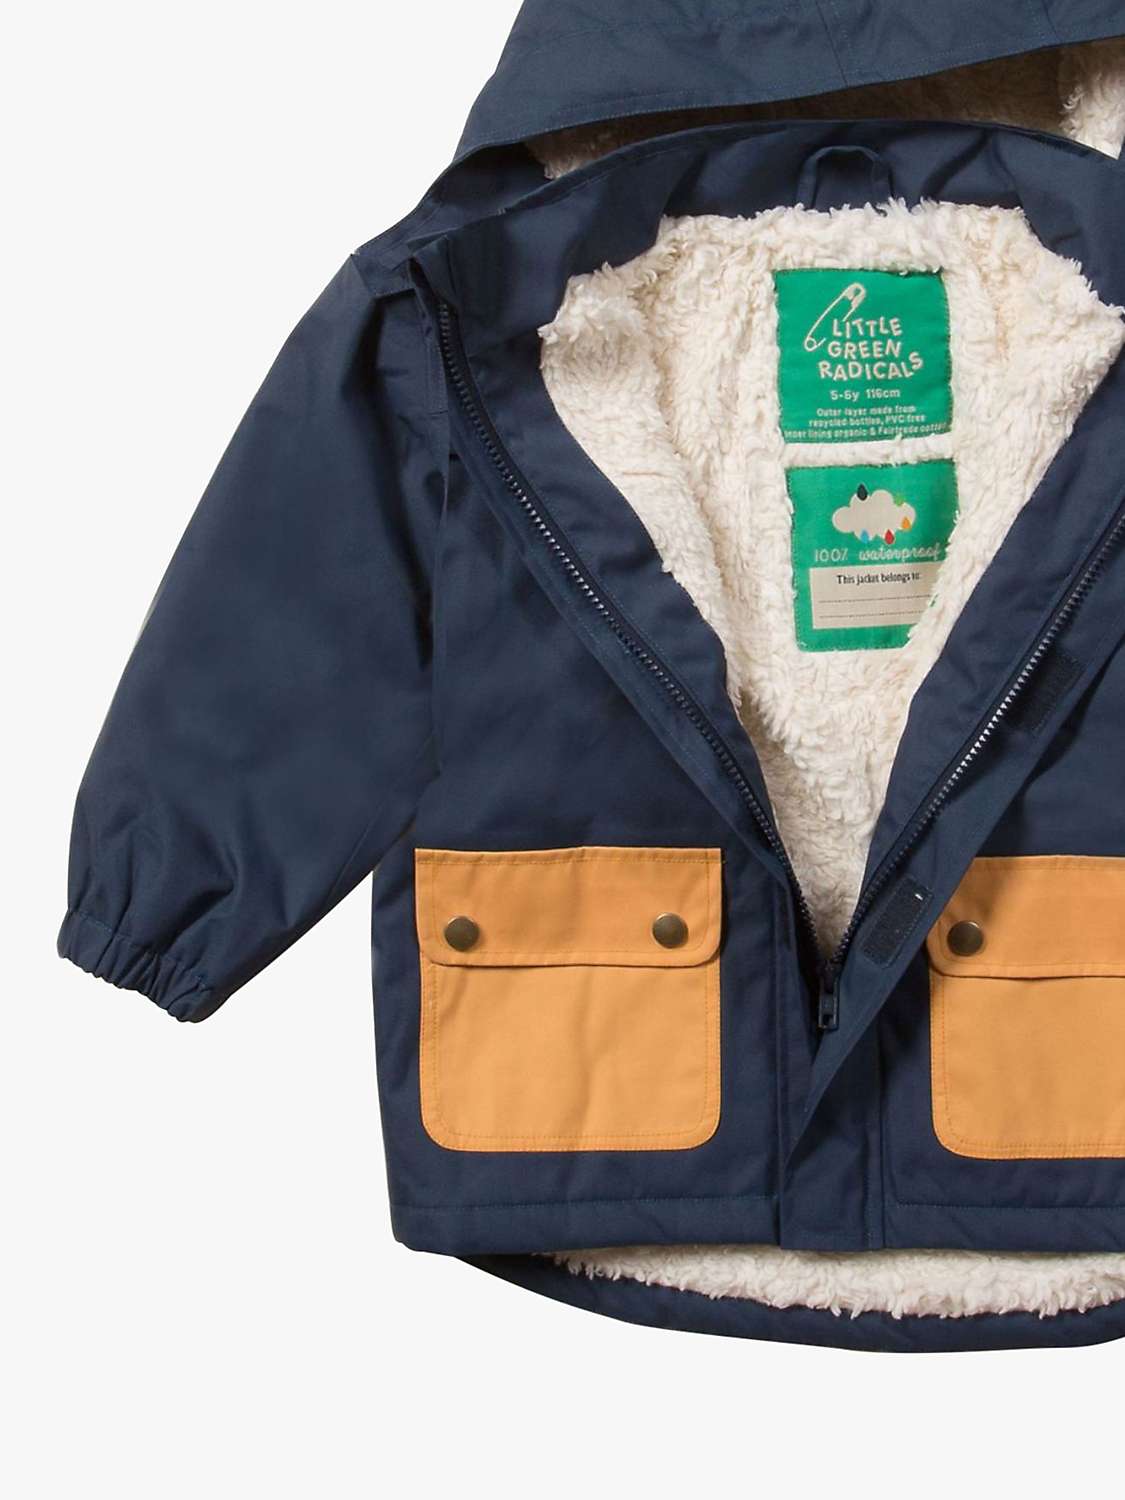 Buy Little Green Radicals Kids' Waterproof Lined Hooded Winter Coat, Navy Online at johnlewis.com